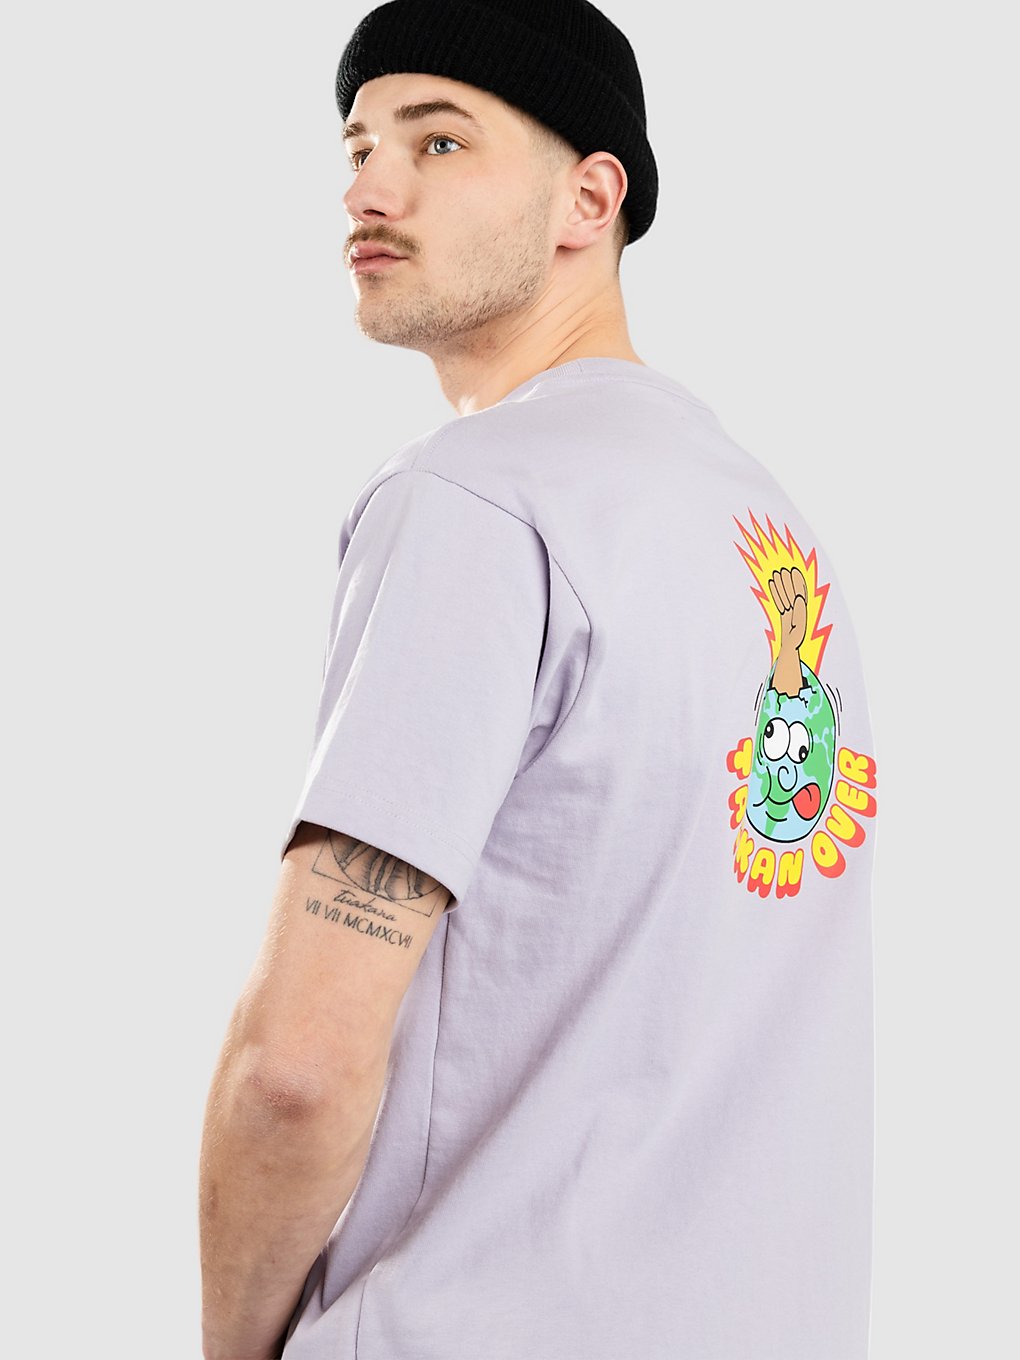 Taikan Over T-Shirt lavender kaufen